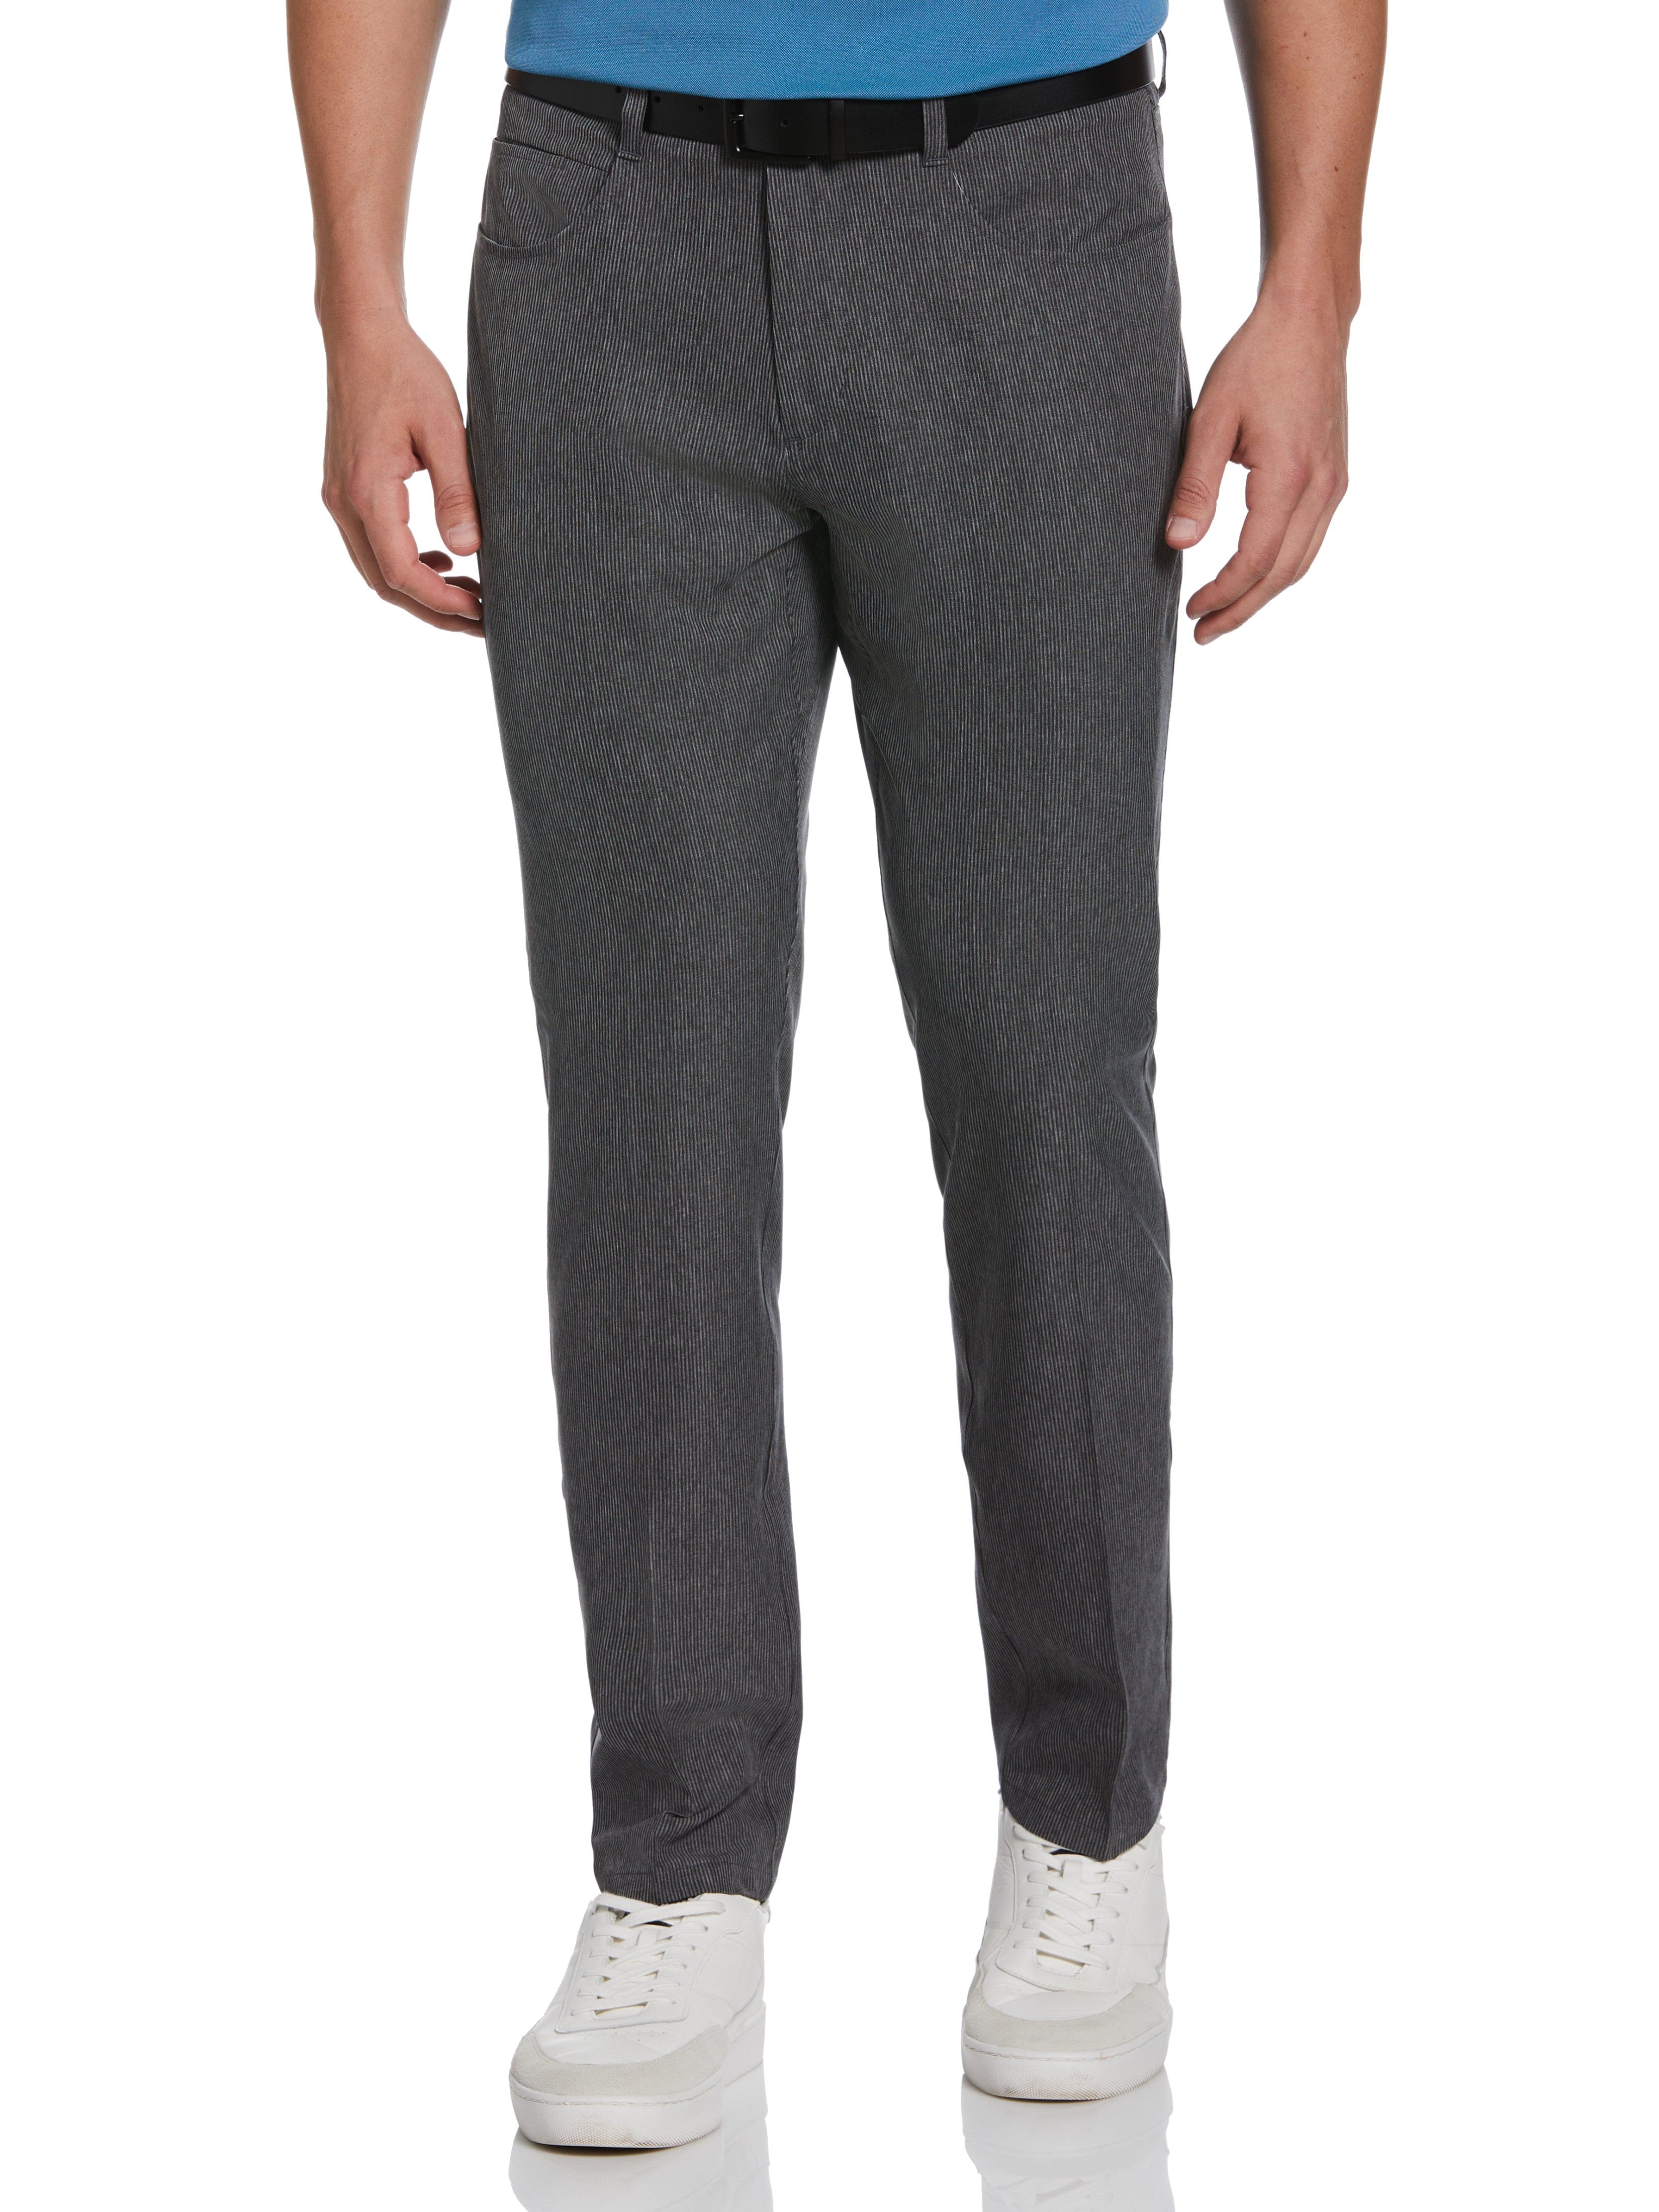 Original Penguin Mens Flat Front Fine Line Print Golf Pants, Size 30 x 32, Black, Polyester/Elastane | Golf Apparel Shop